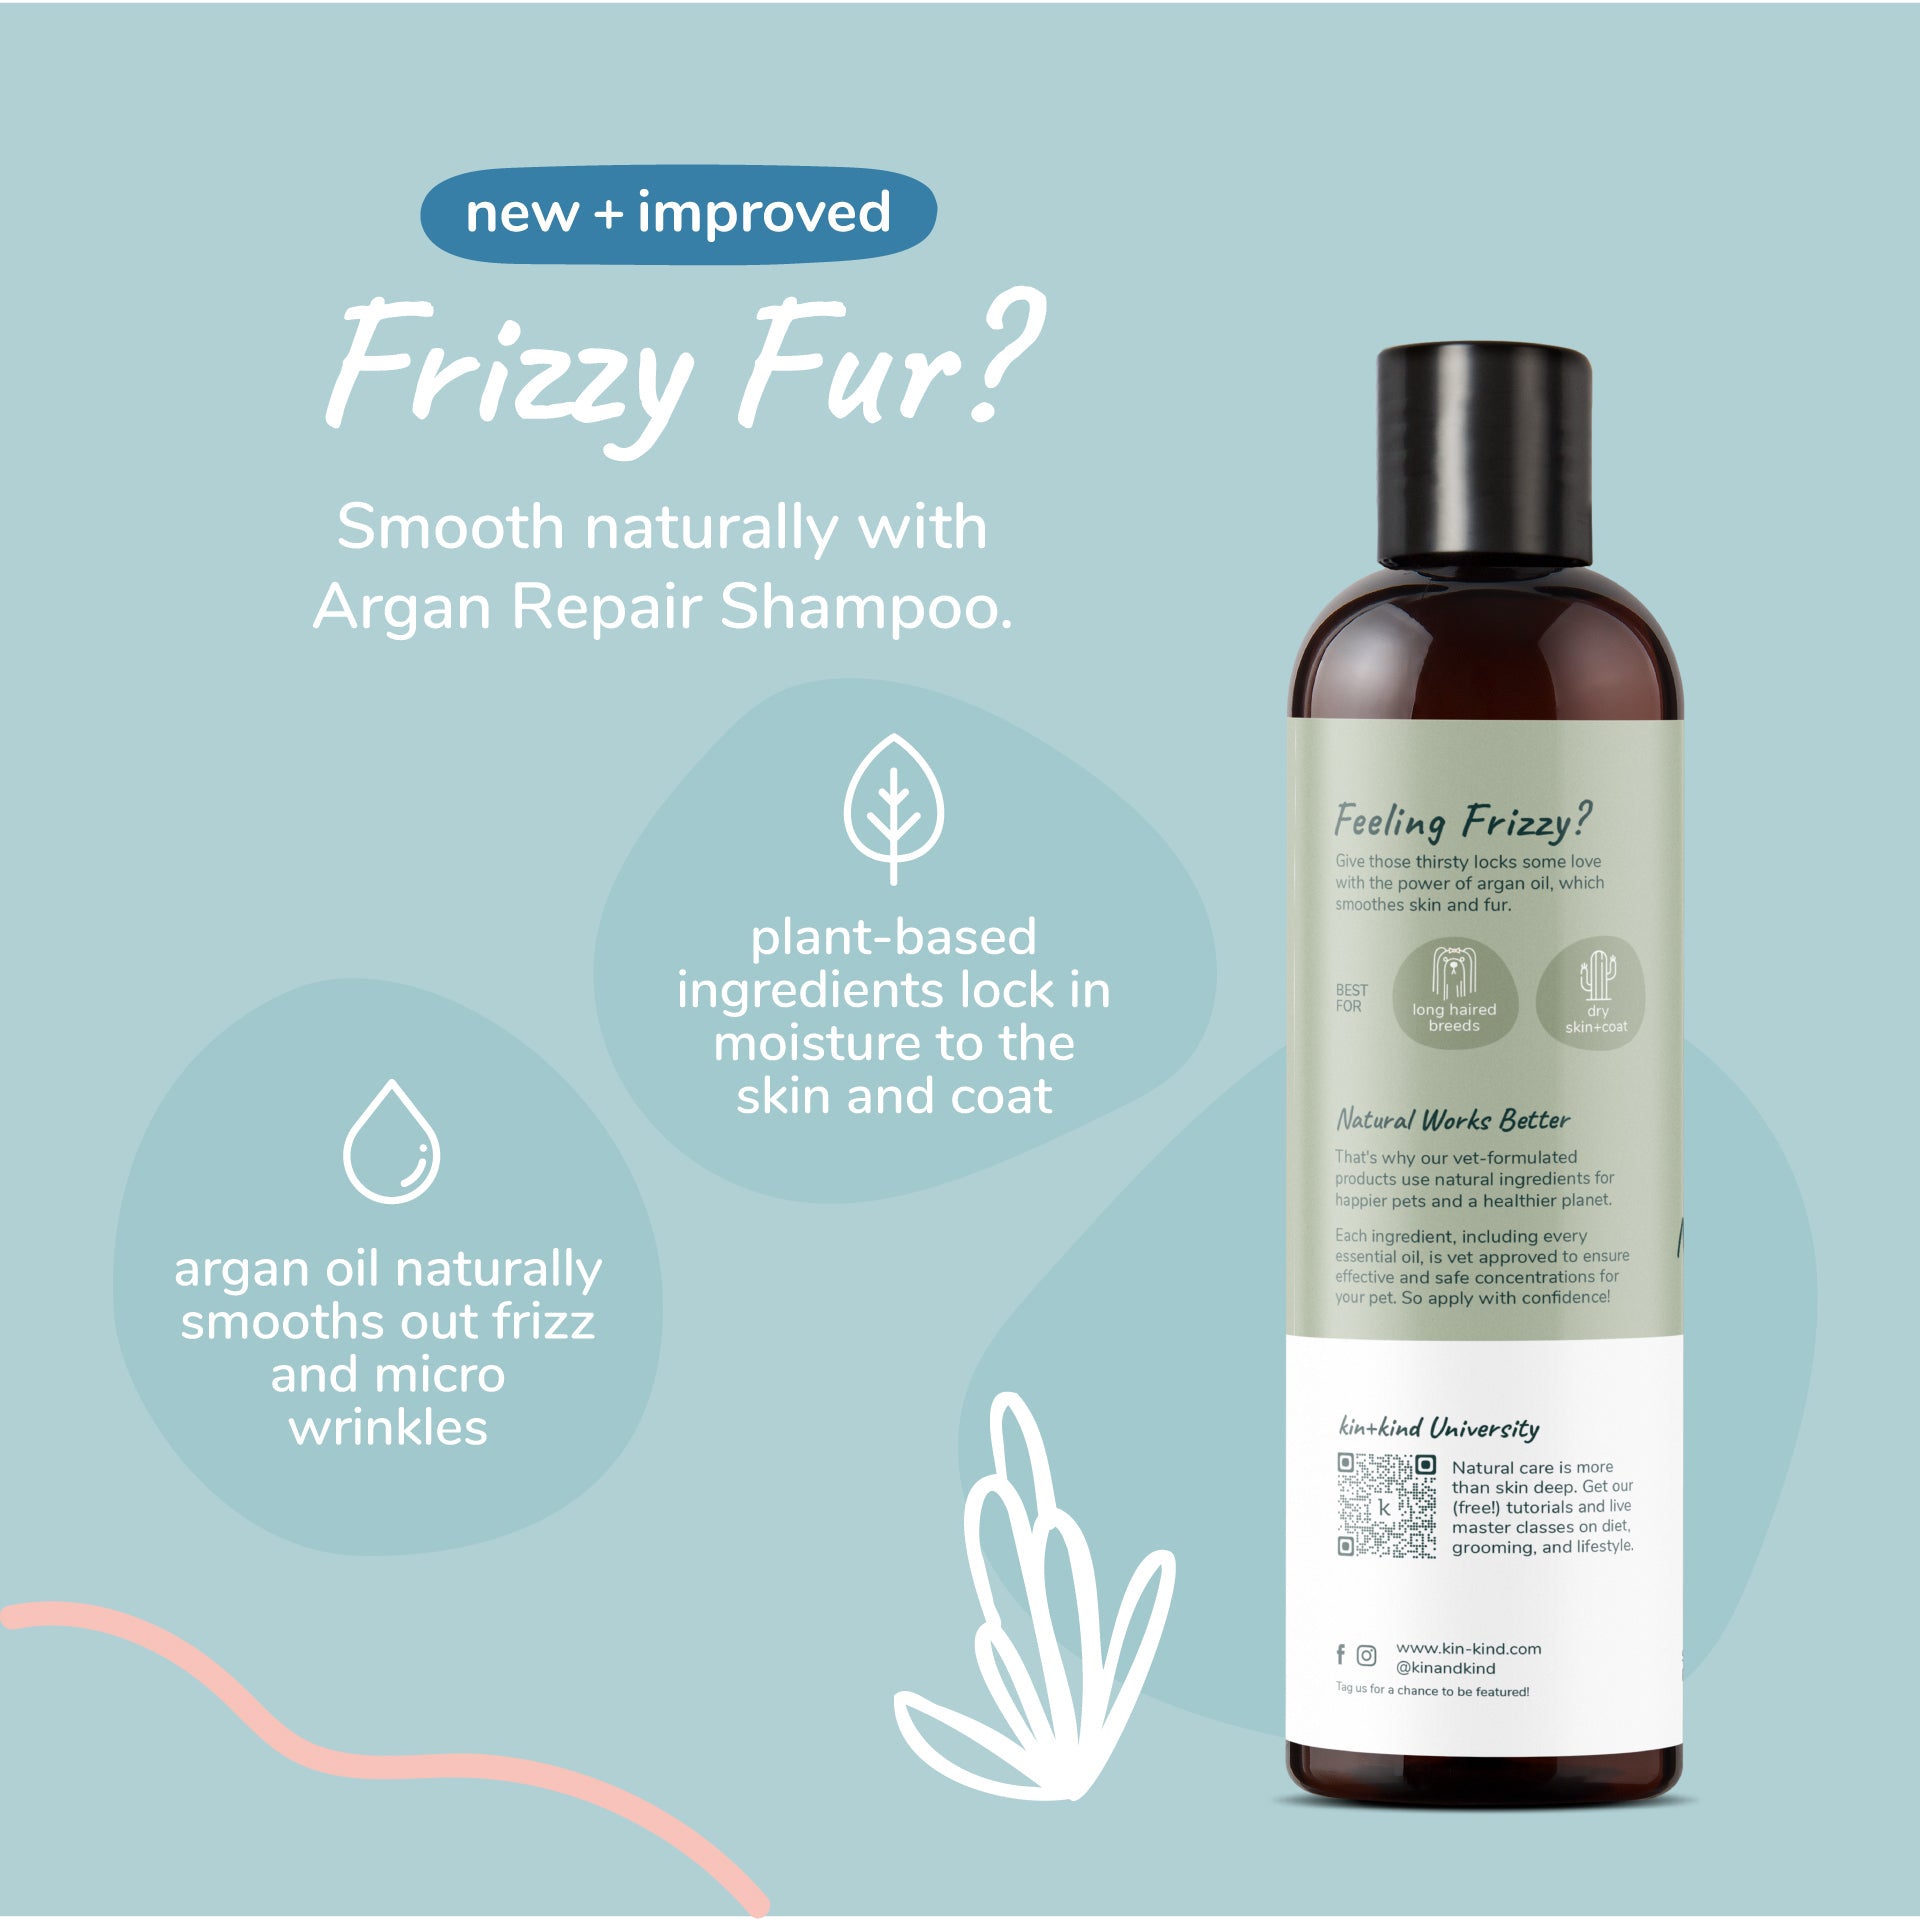 Kin + Kind Dry Skin & Coat Natural Shampoo for Dogs Cedar, 12 oz - Mutts & Co.